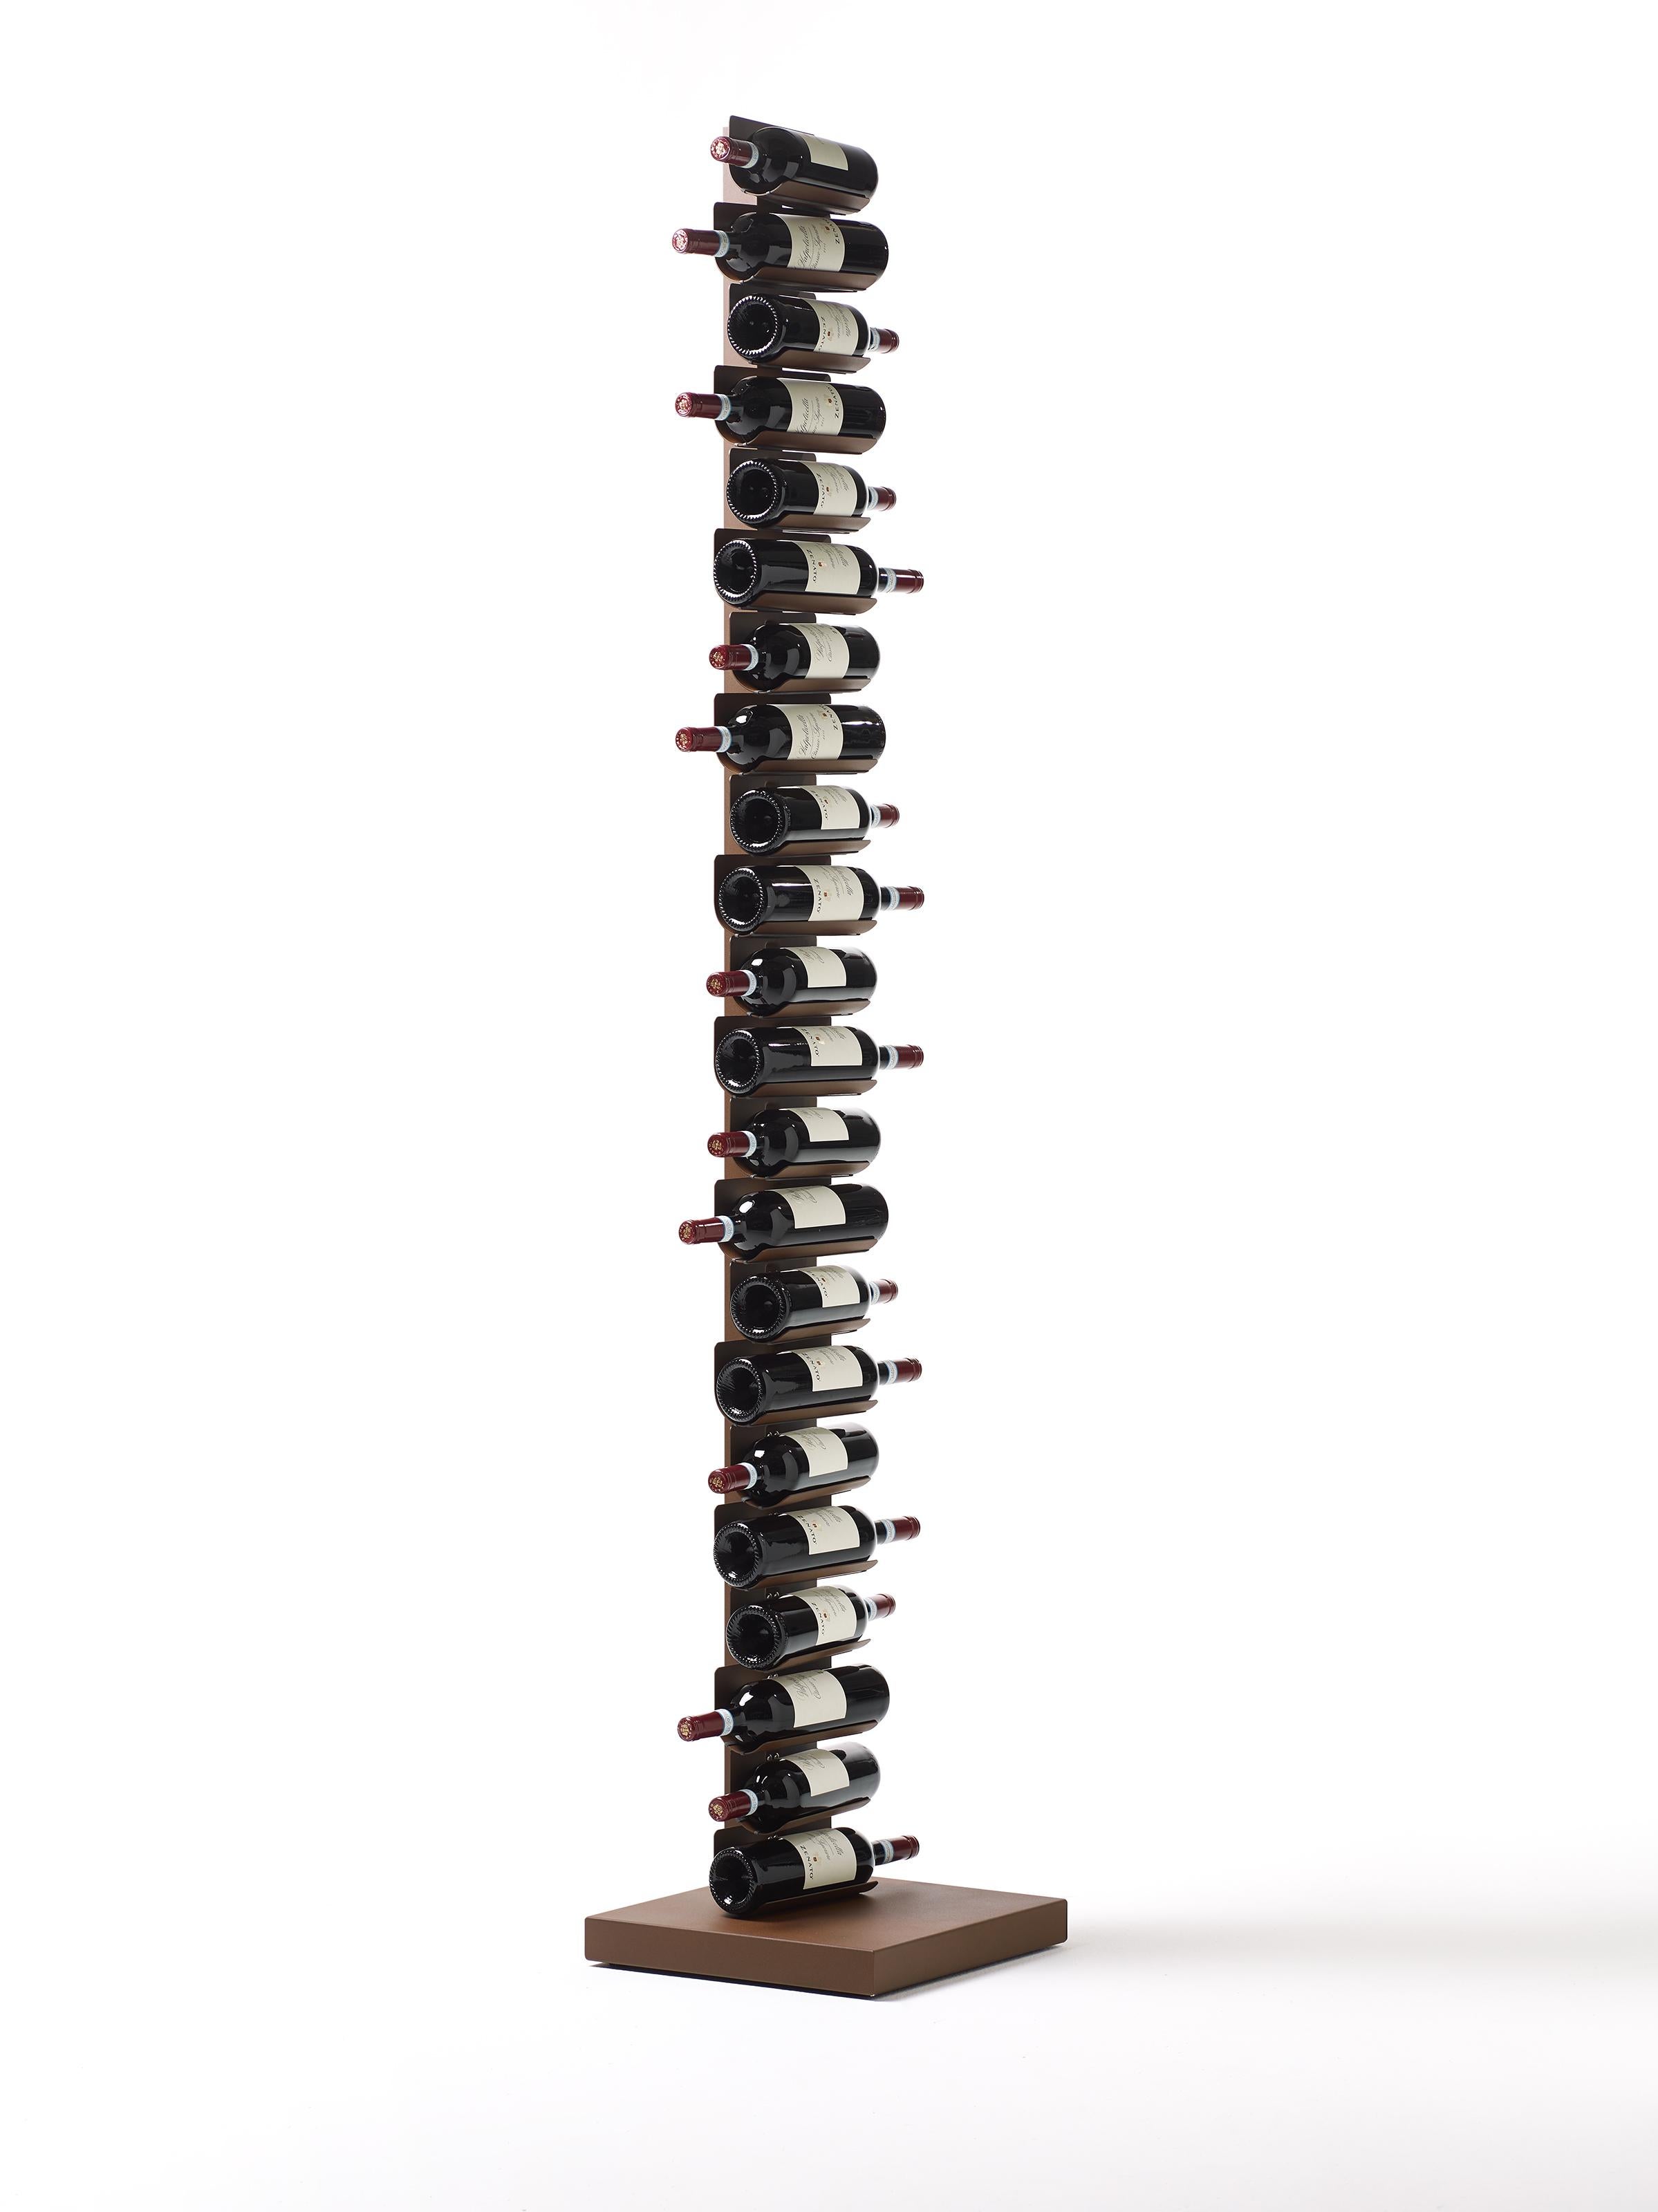 En vente : Brown (Corten) Porte-bouteilles vertical Ptolomeo Vino de Opinion Ciatti, grand modèle 2